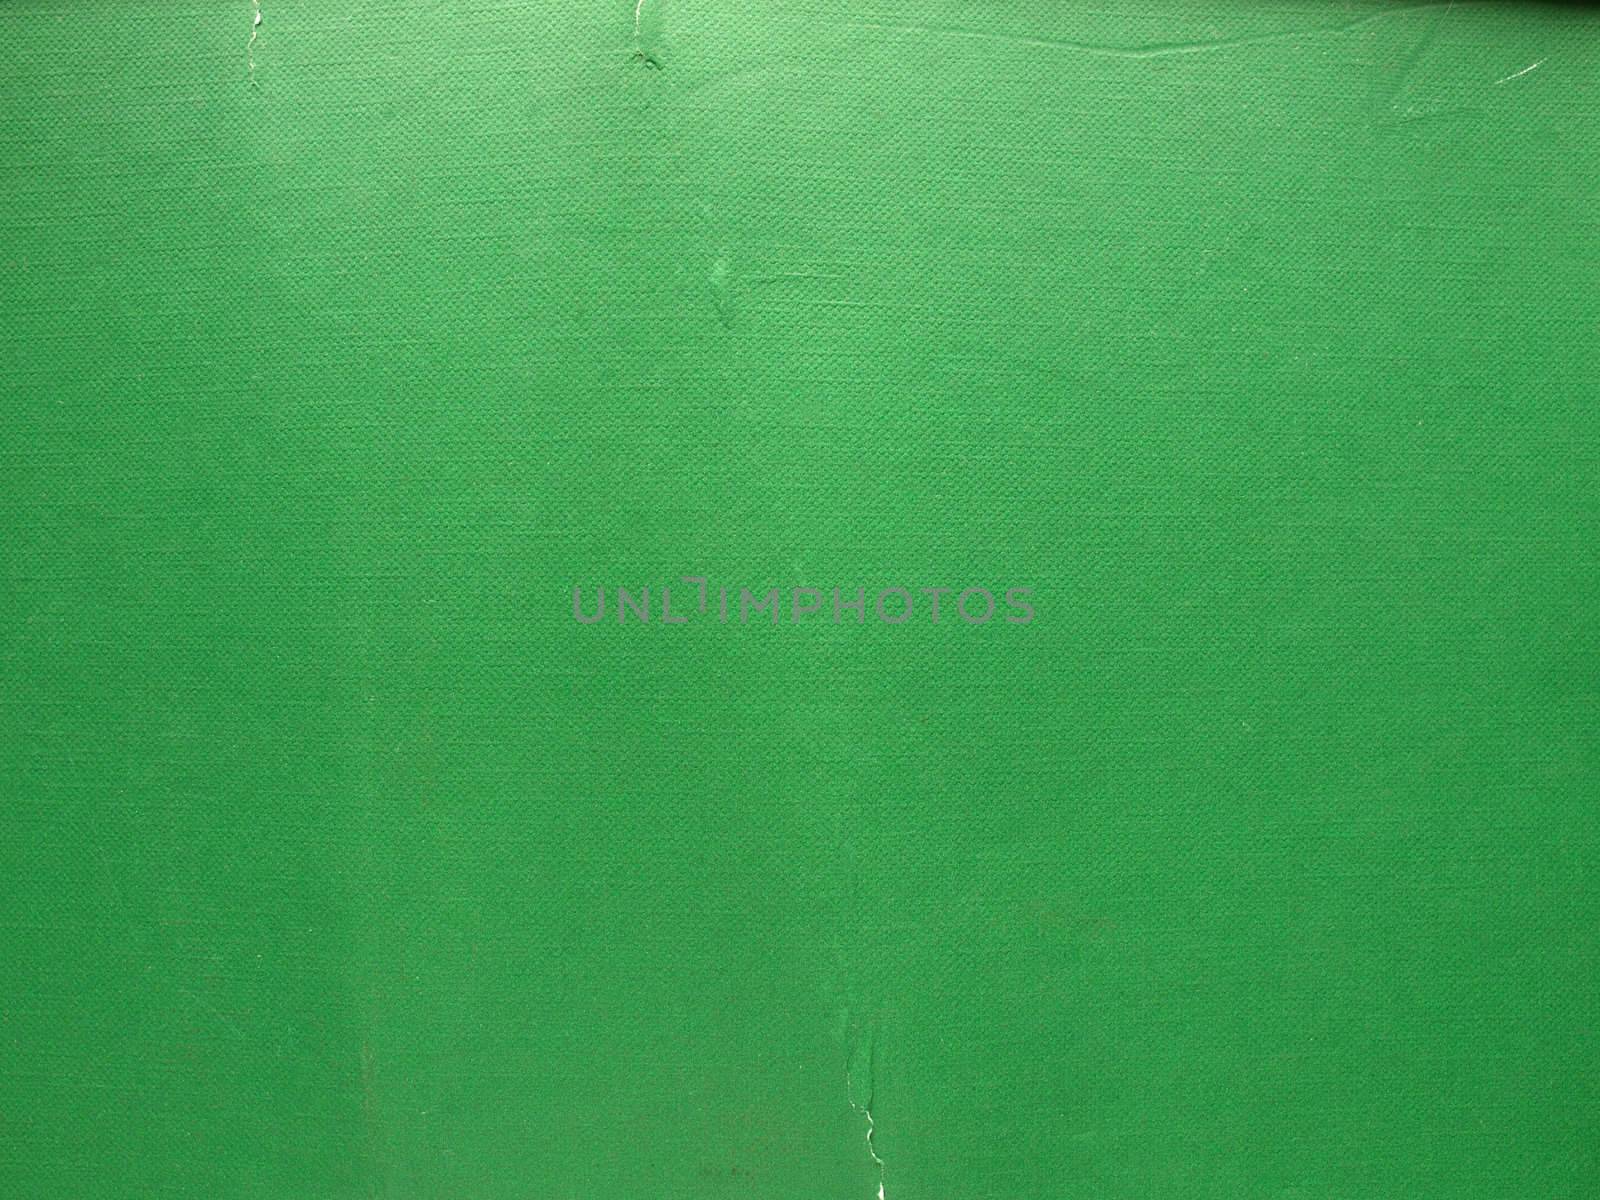 Grunge green cardboard by paolo77